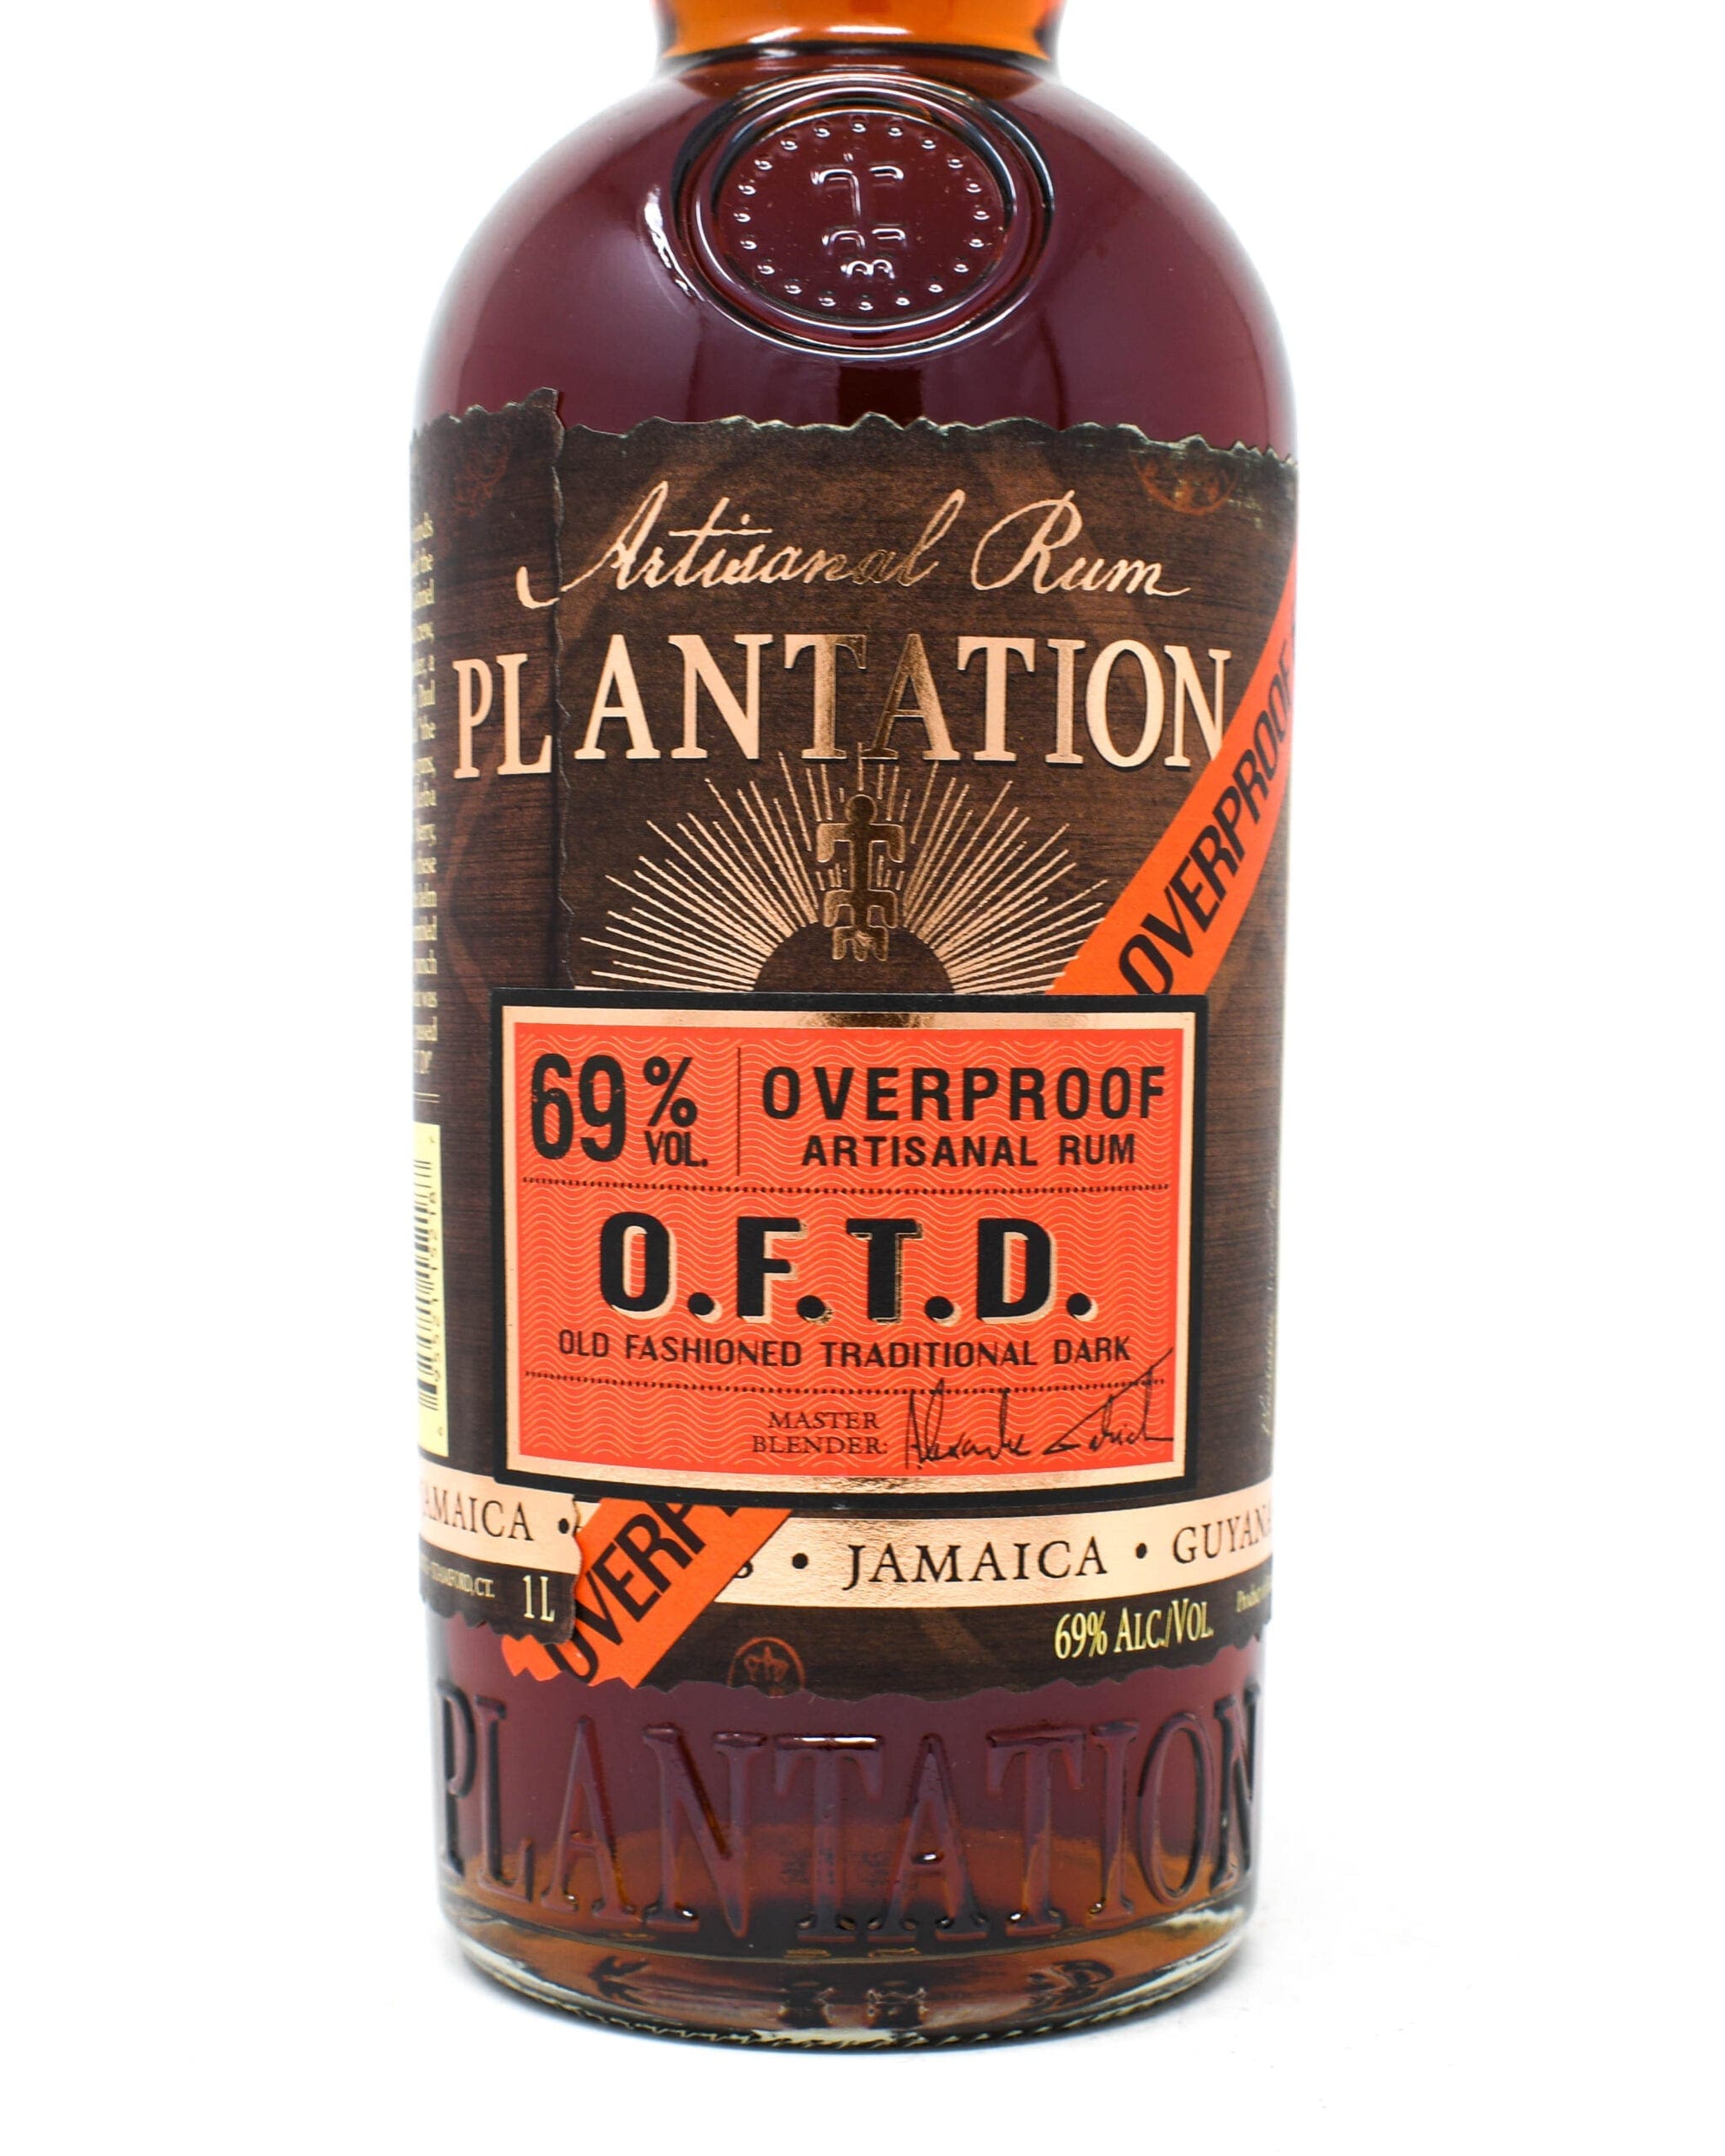 750ml Princeville Rum, Market O.F.T.D., - Artisanal Plantation, Overproof Wine